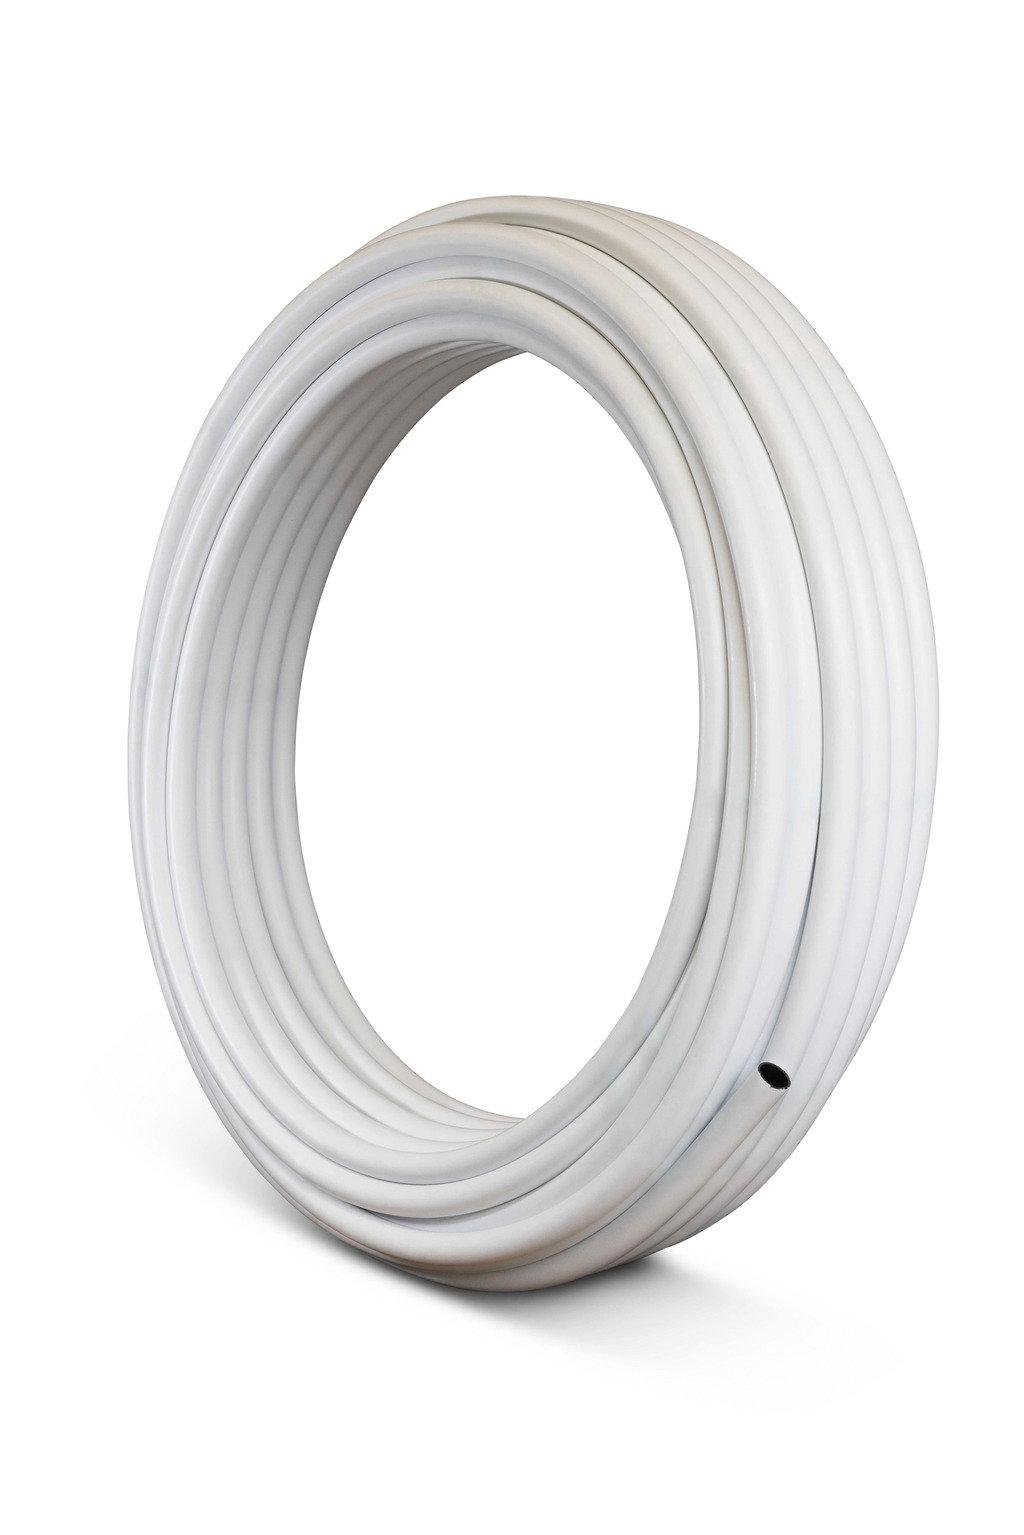 DN63 SDR13.6 Polyethylene Pipe White Telco  Co-Extruded White X 140M